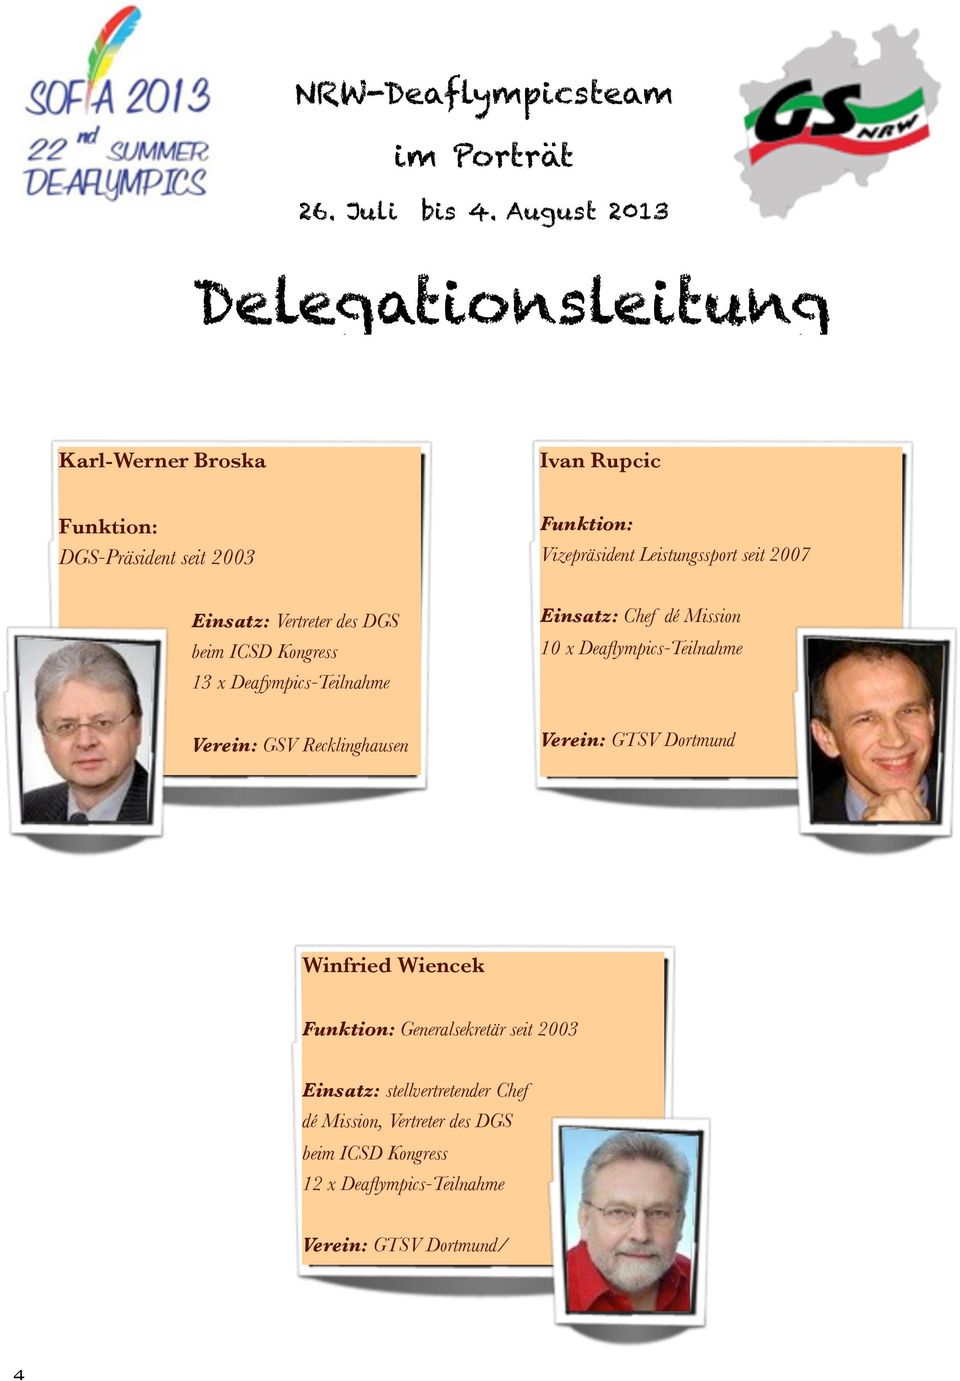 Deaflympics-Teilnahme Verein: GSV Recklinghausen Verein: GTSV Dortmund Winfried Wiencek Generalsekretär seit 2003